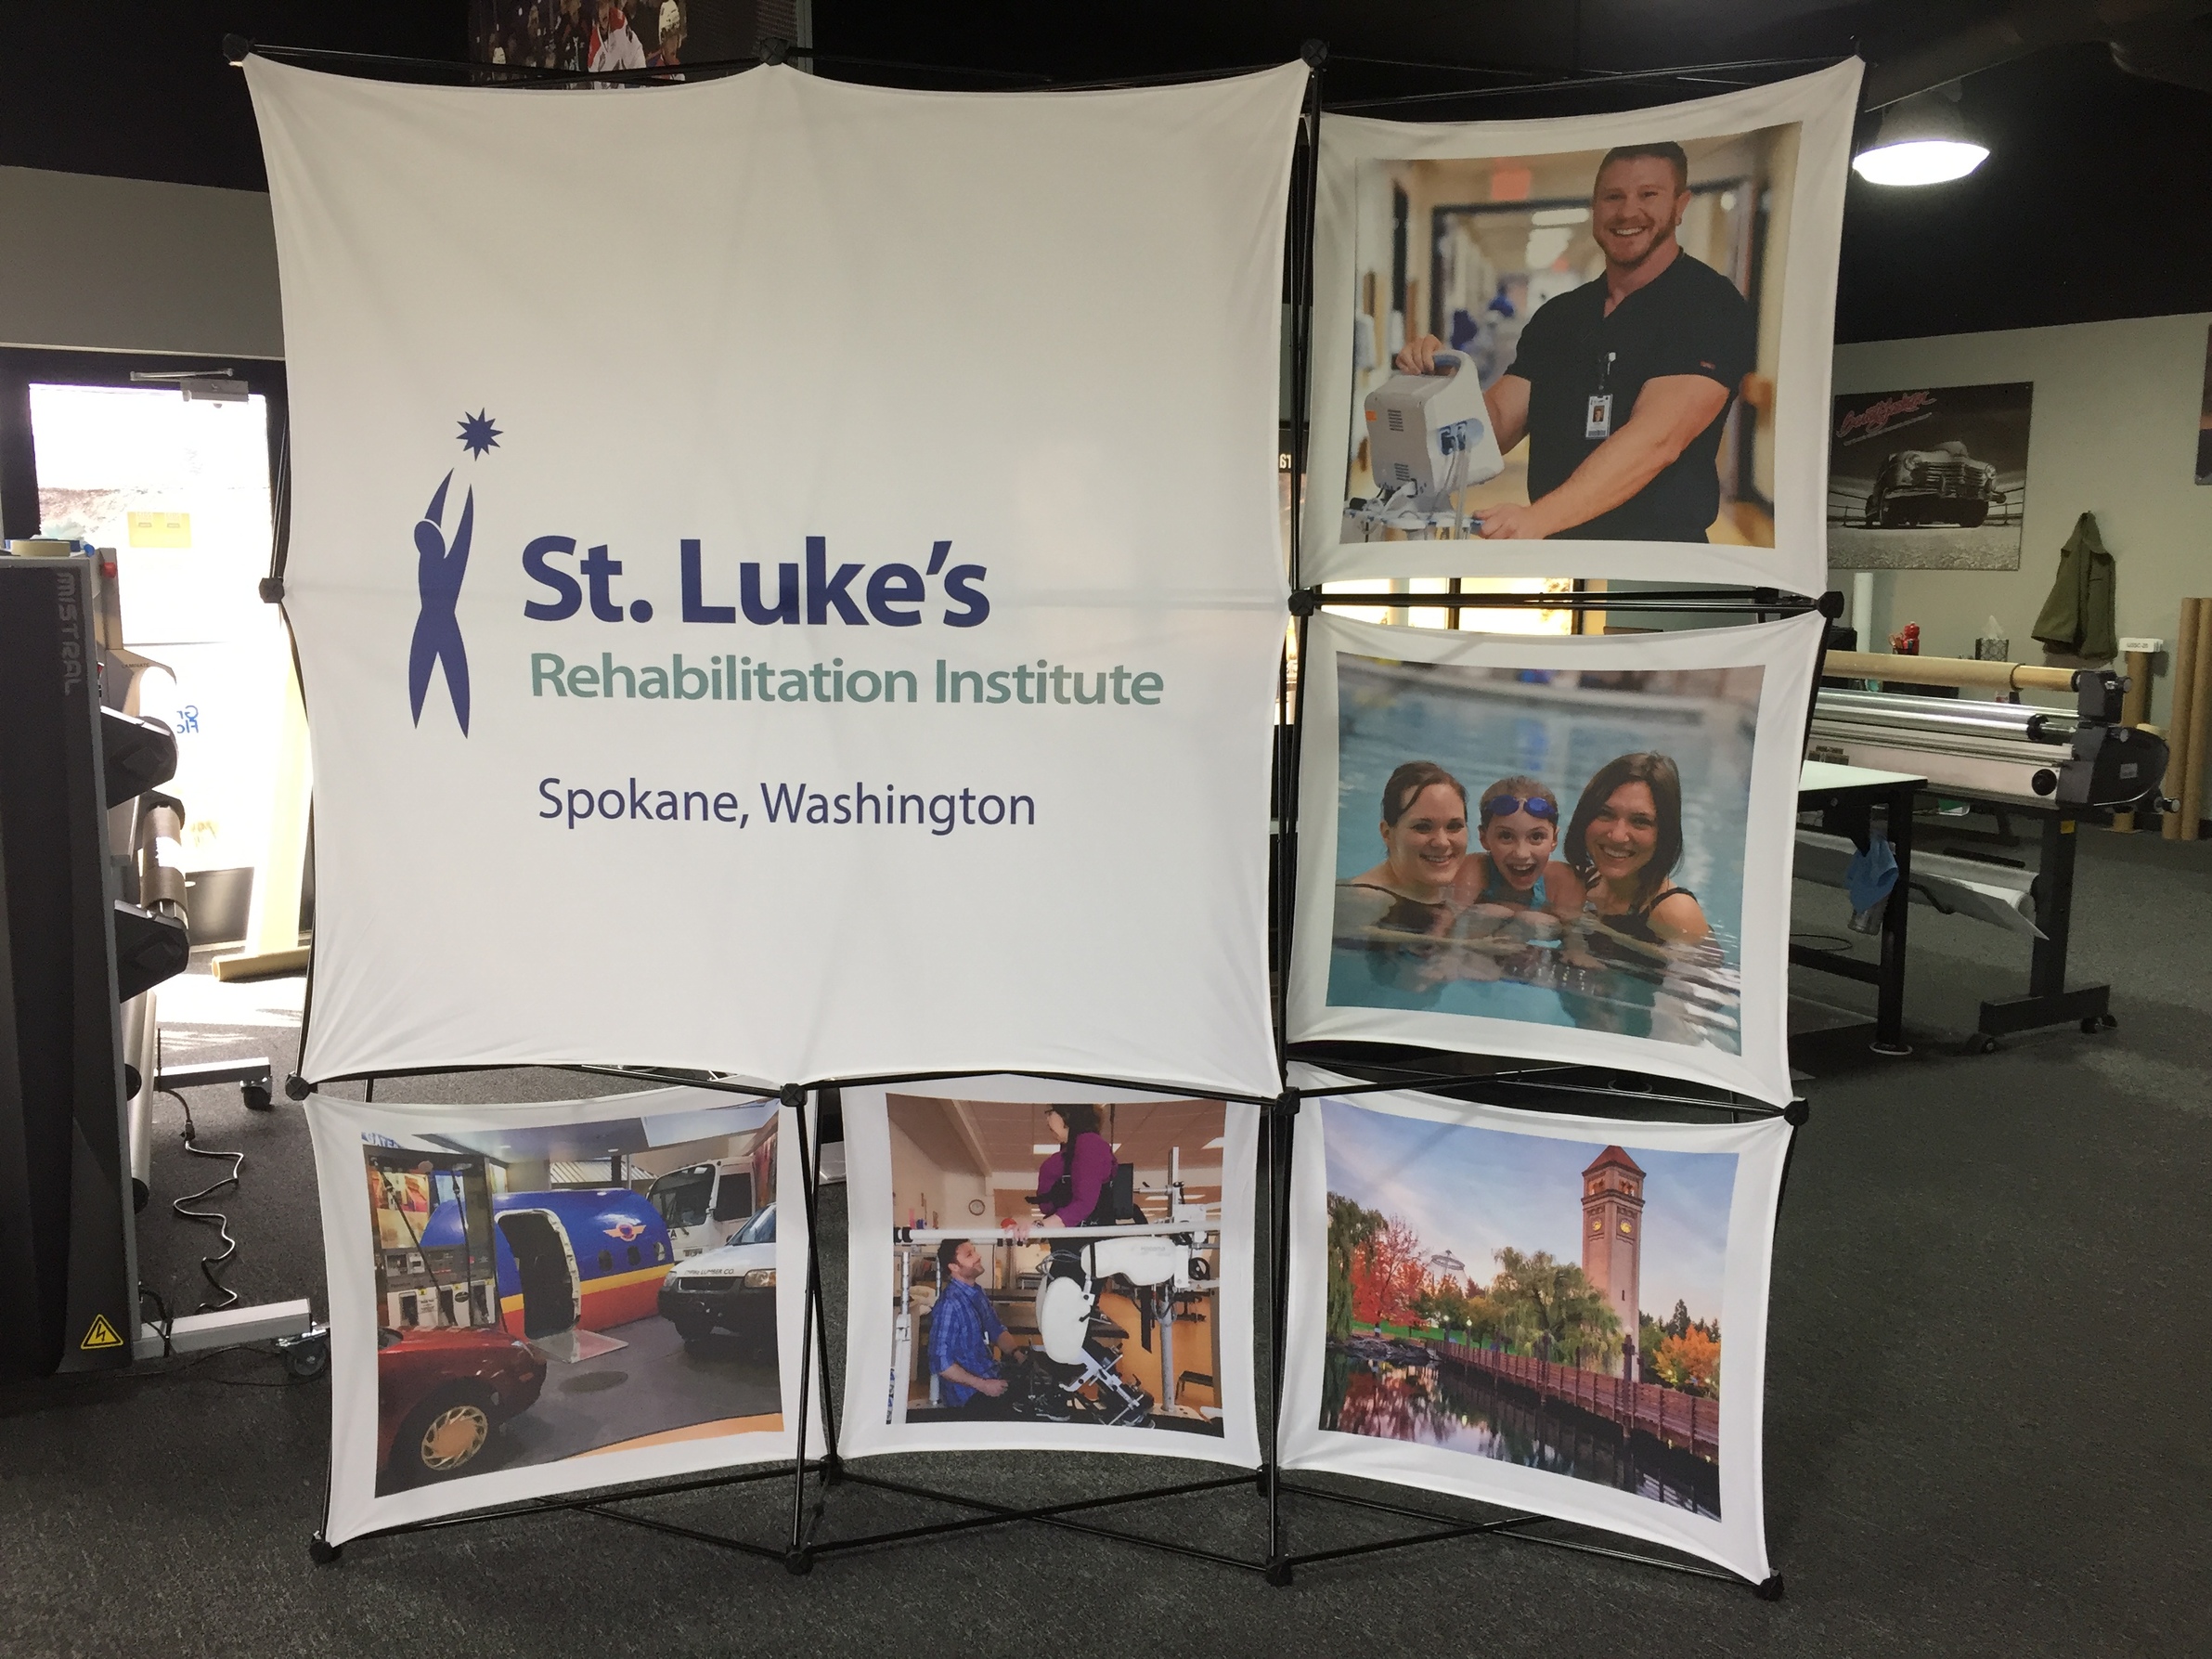 St. Luke's Rehabilitation Institute trade show display